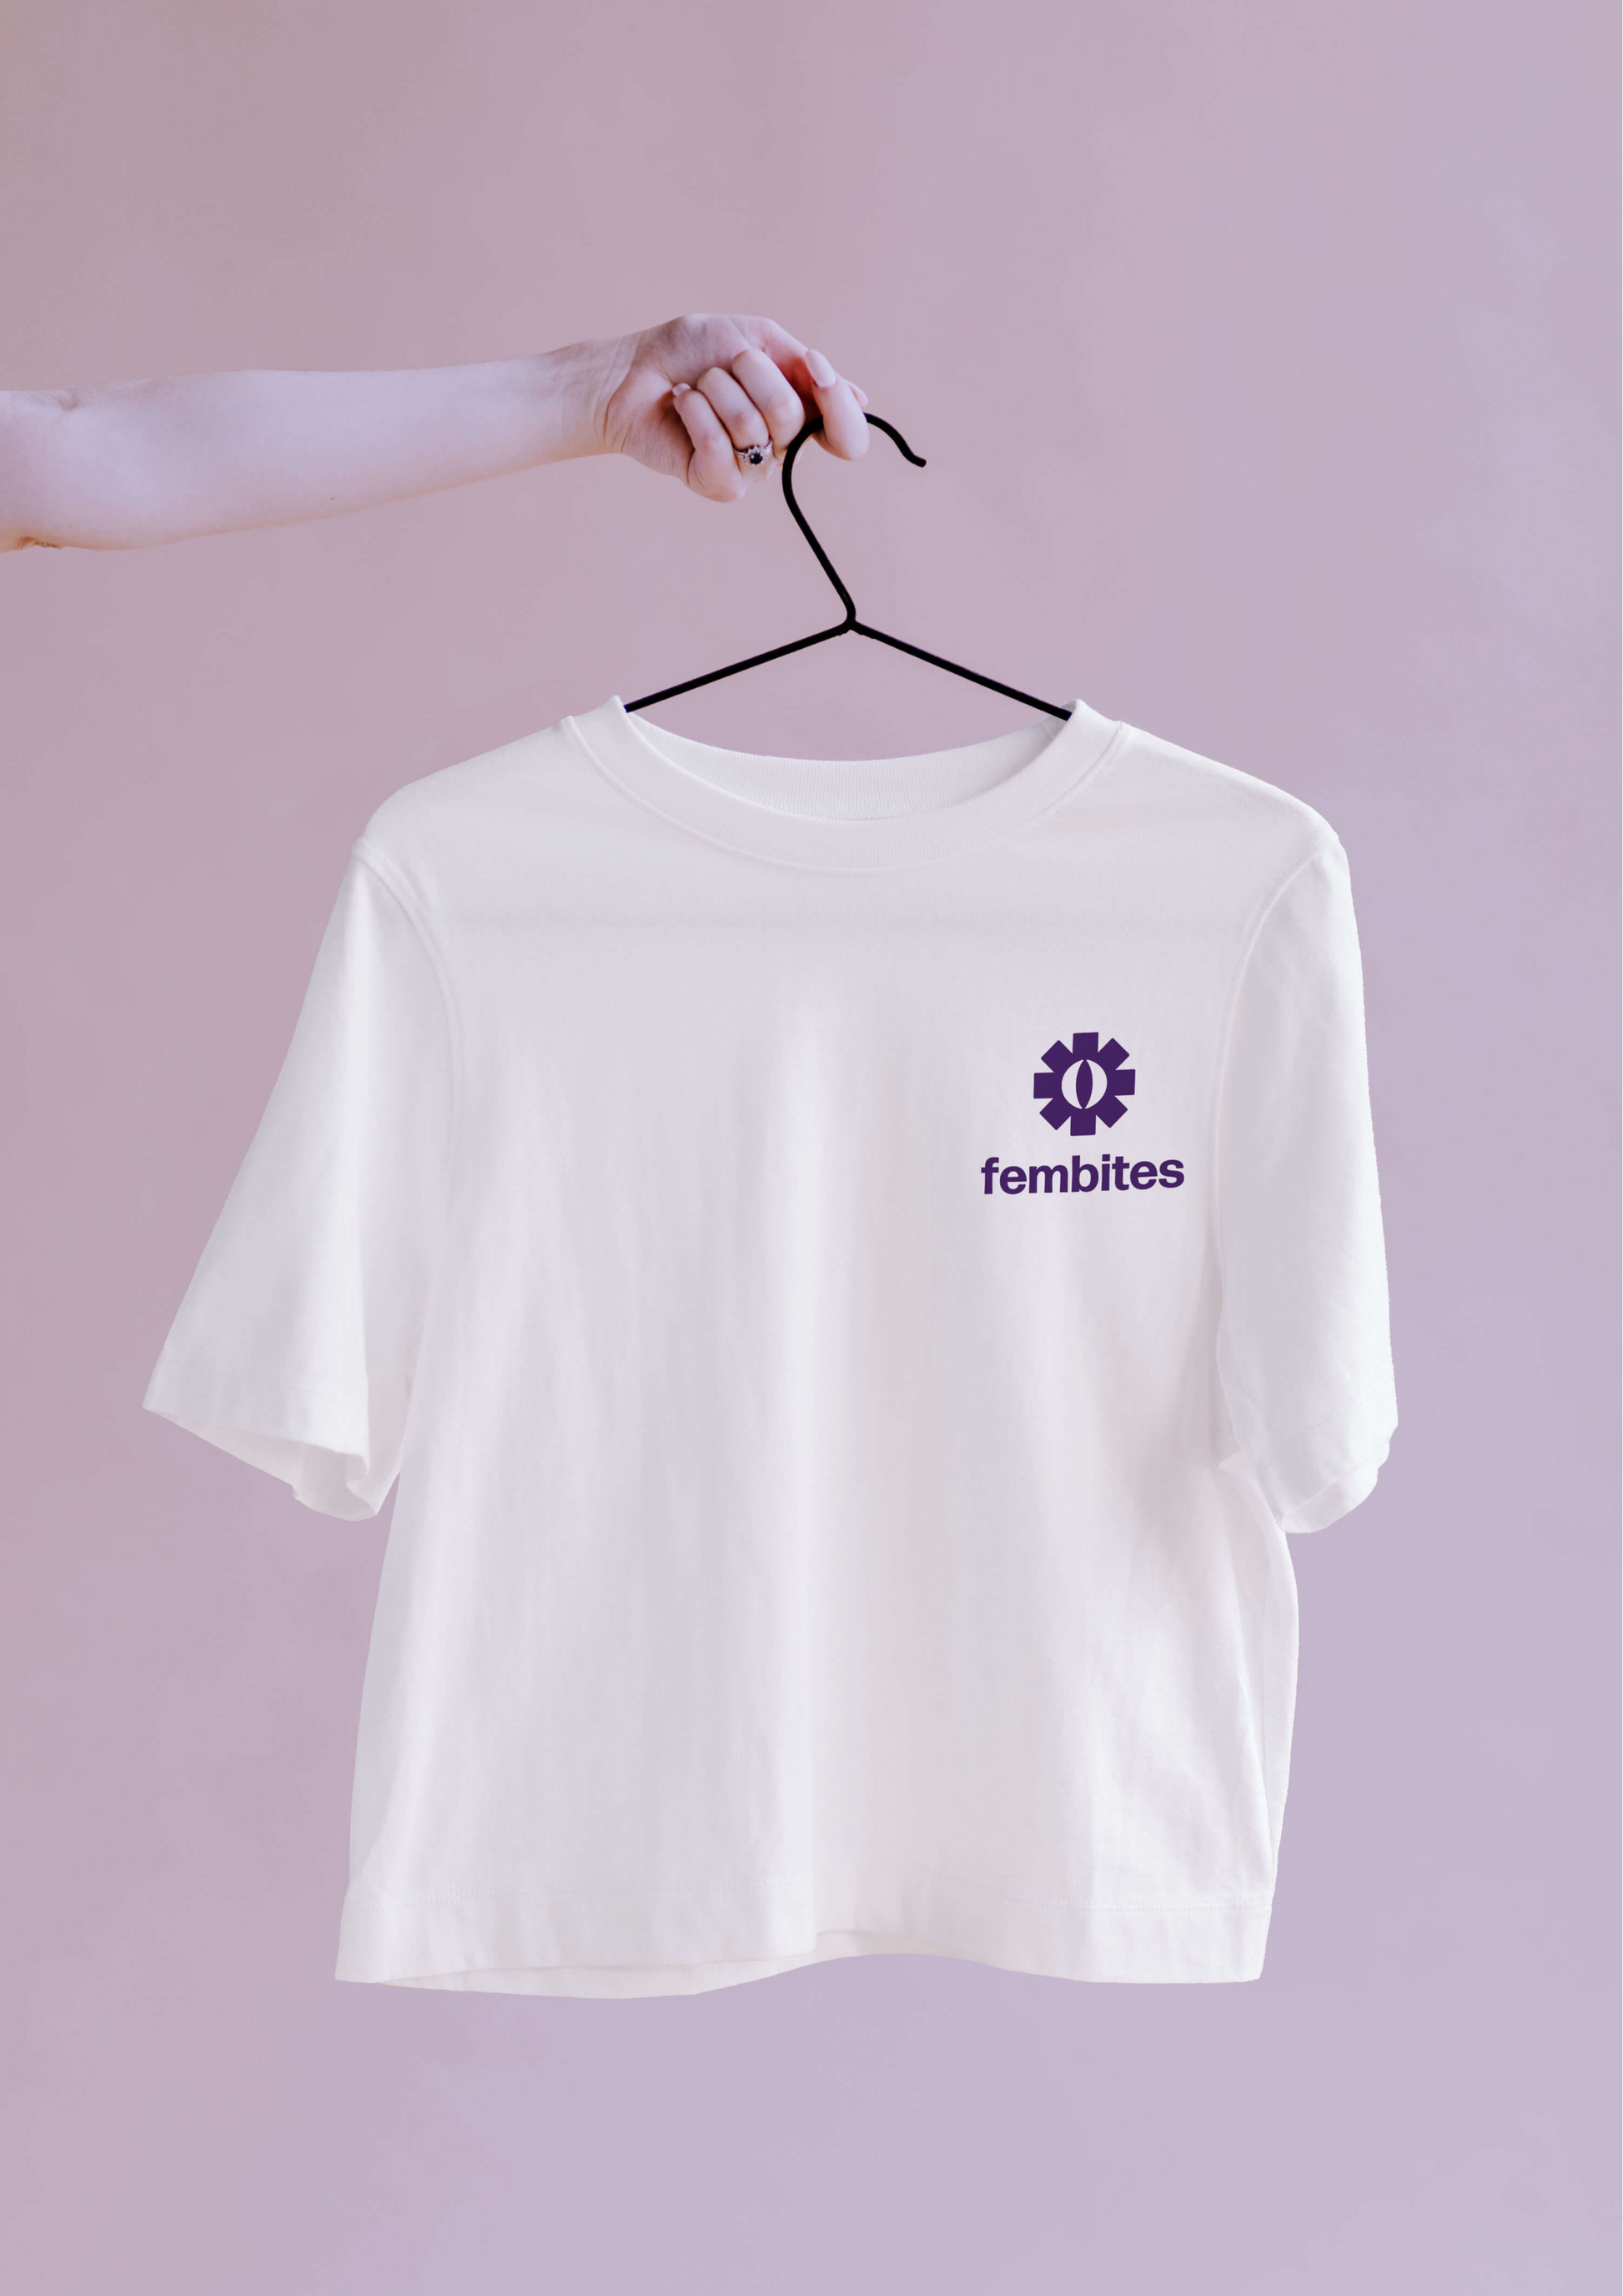 bedrucktes Tshirt mit fembites Logo